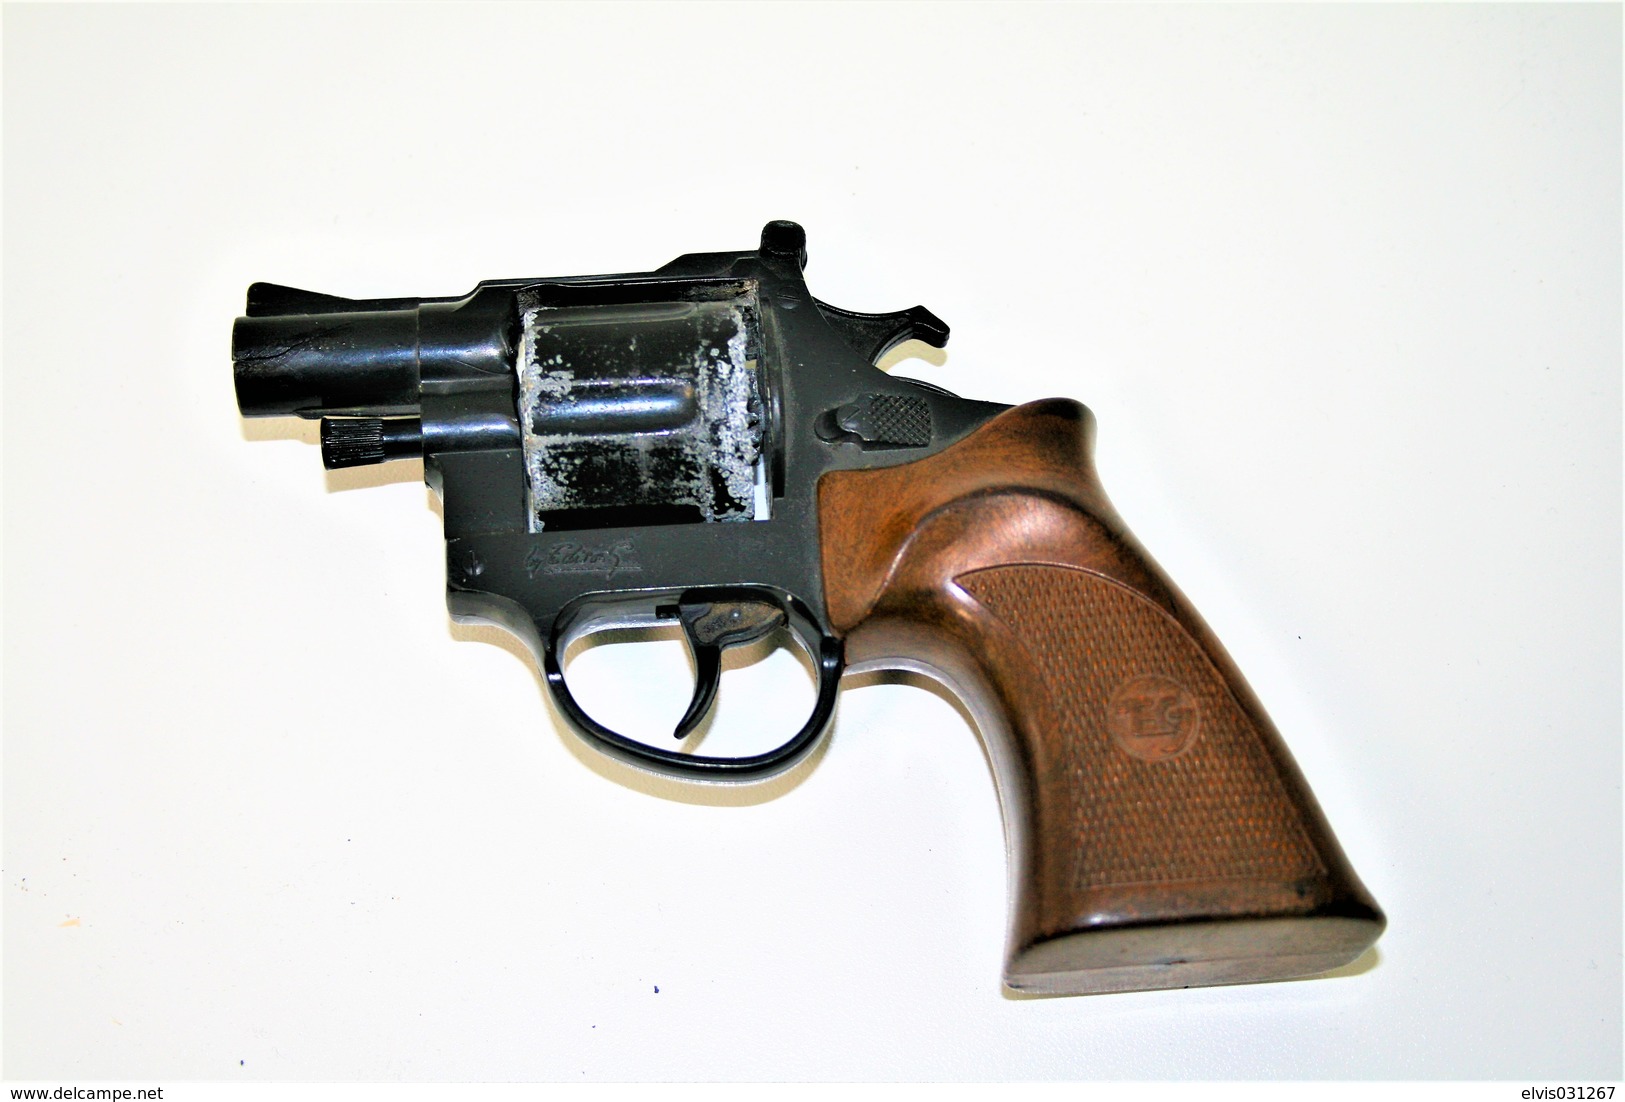 Vintage TOY GUN : KAT80181-1 by edison giocattoli - L=16cm - 19??s - keywords : Cap Gun - Cork - Revolver - Pistol